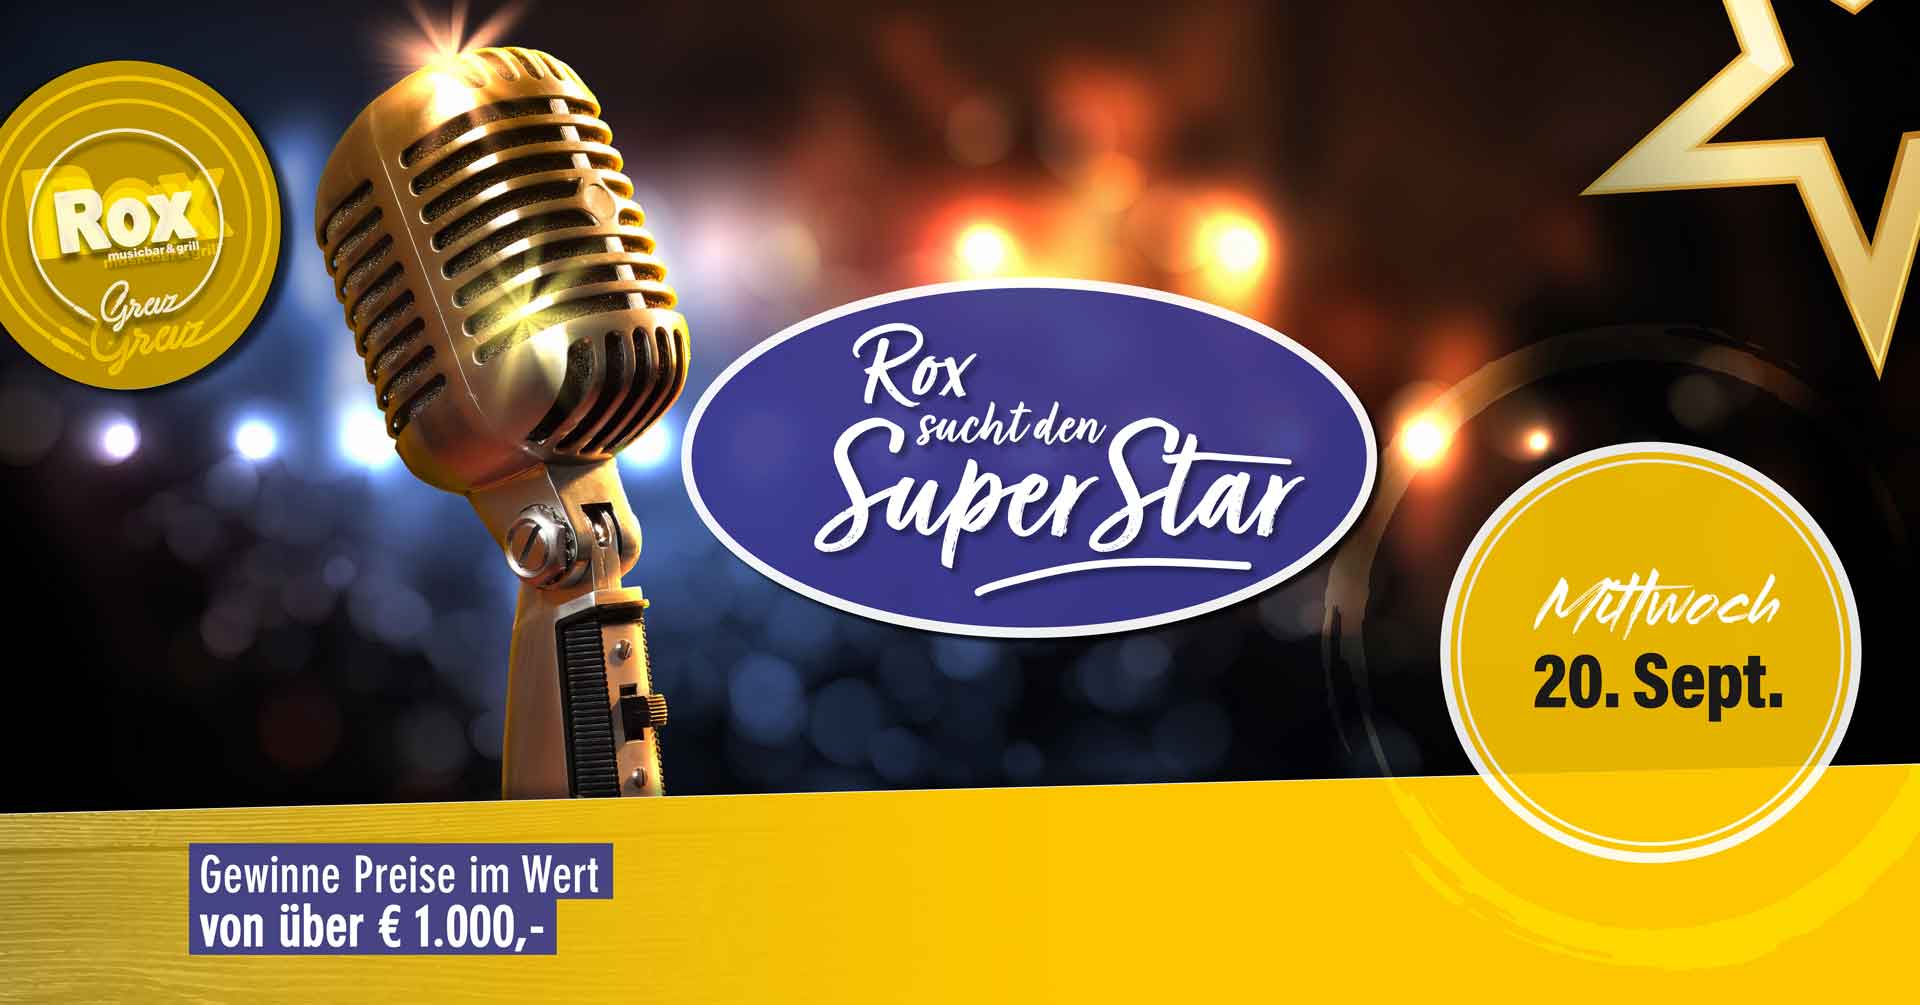 Rox sucht den Karaoke Superstar